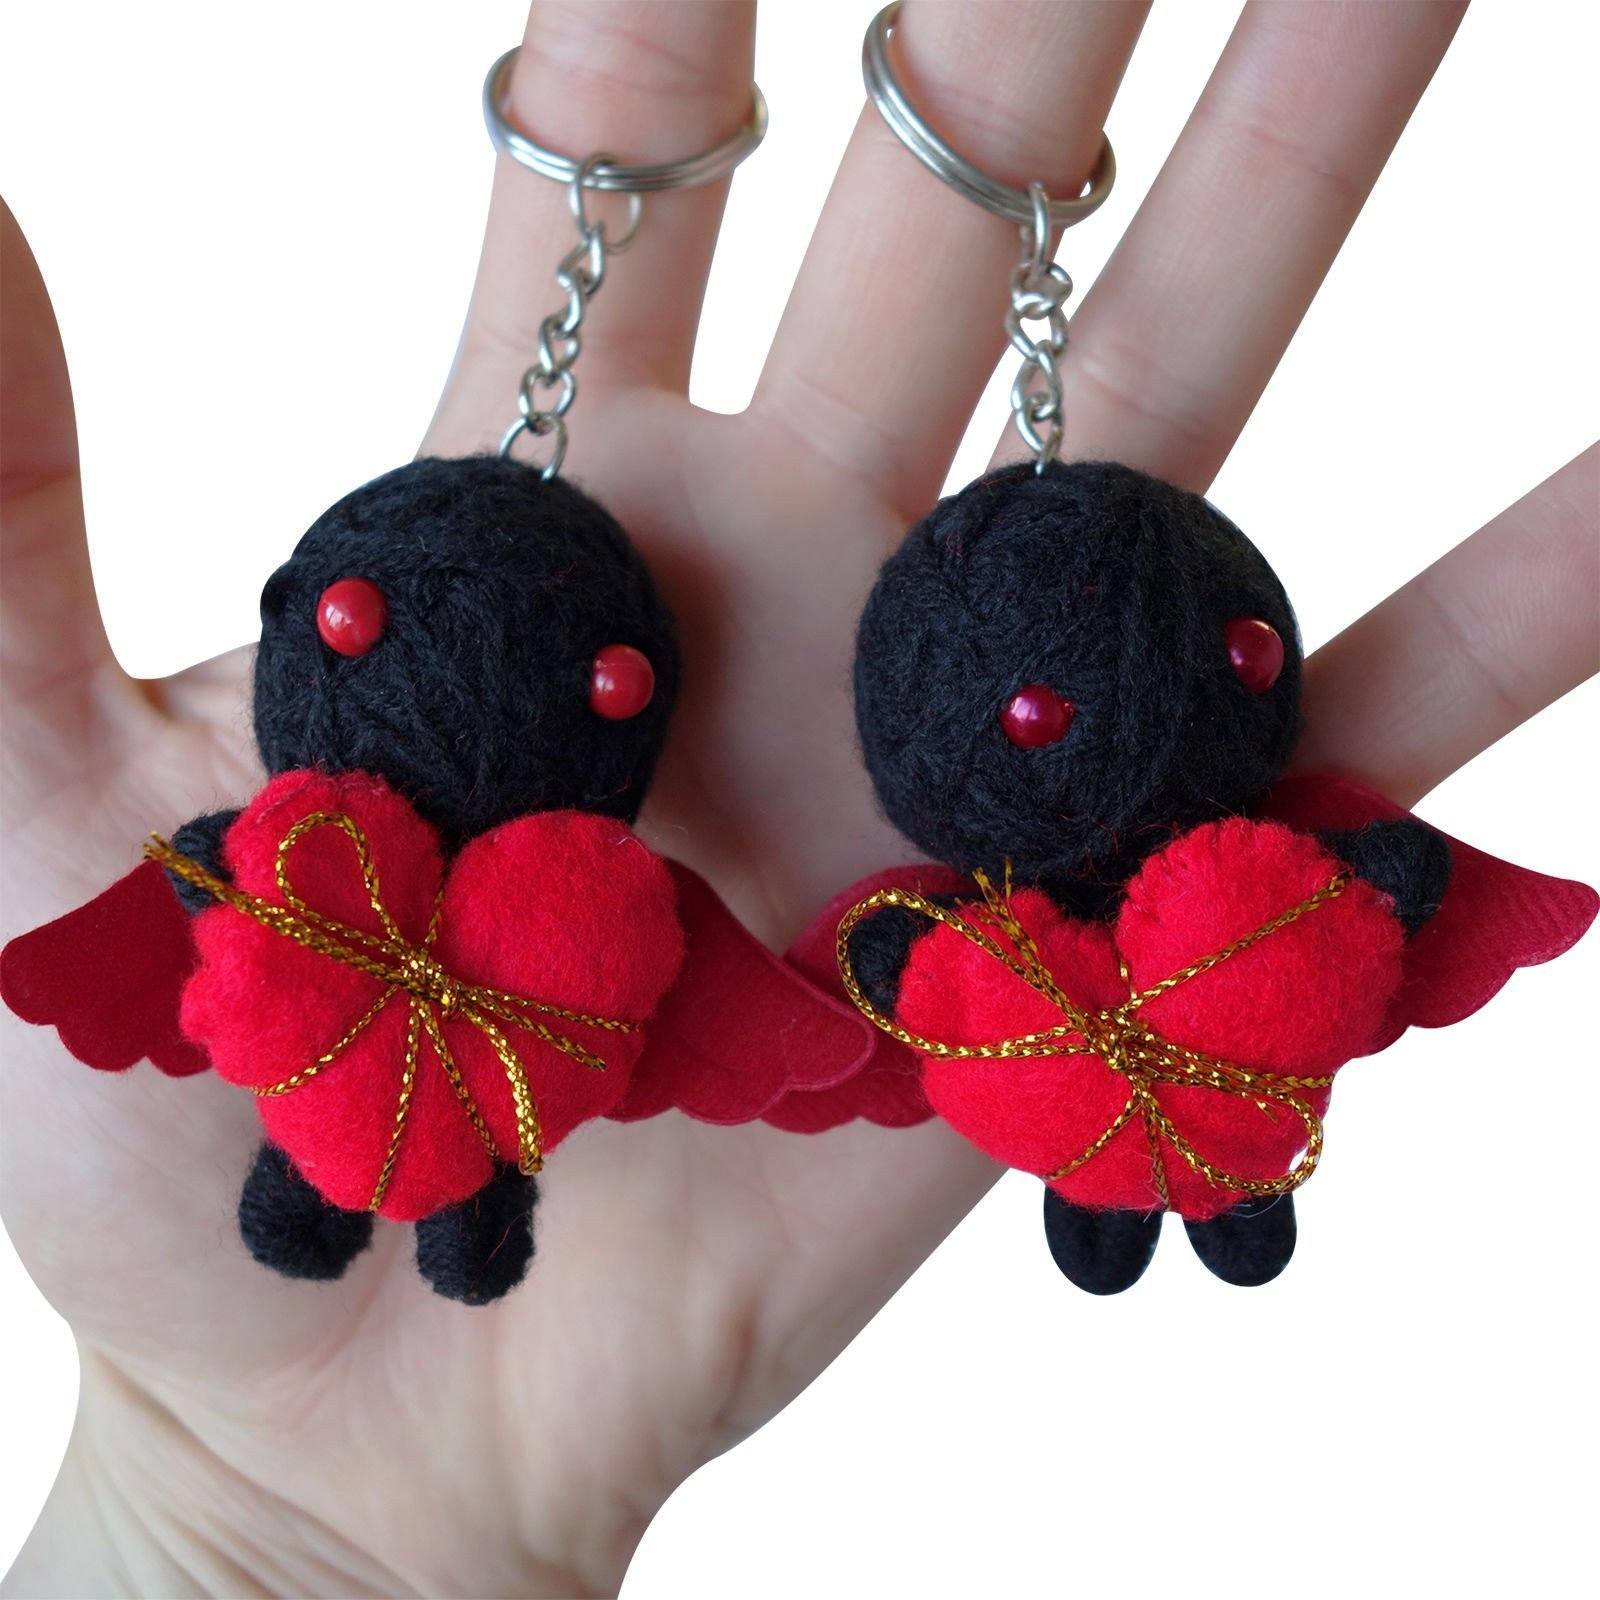 2 X Voodoo Doll Keychains Keyrings Fobs Cherub Cupid Red Love Heart Present Gift